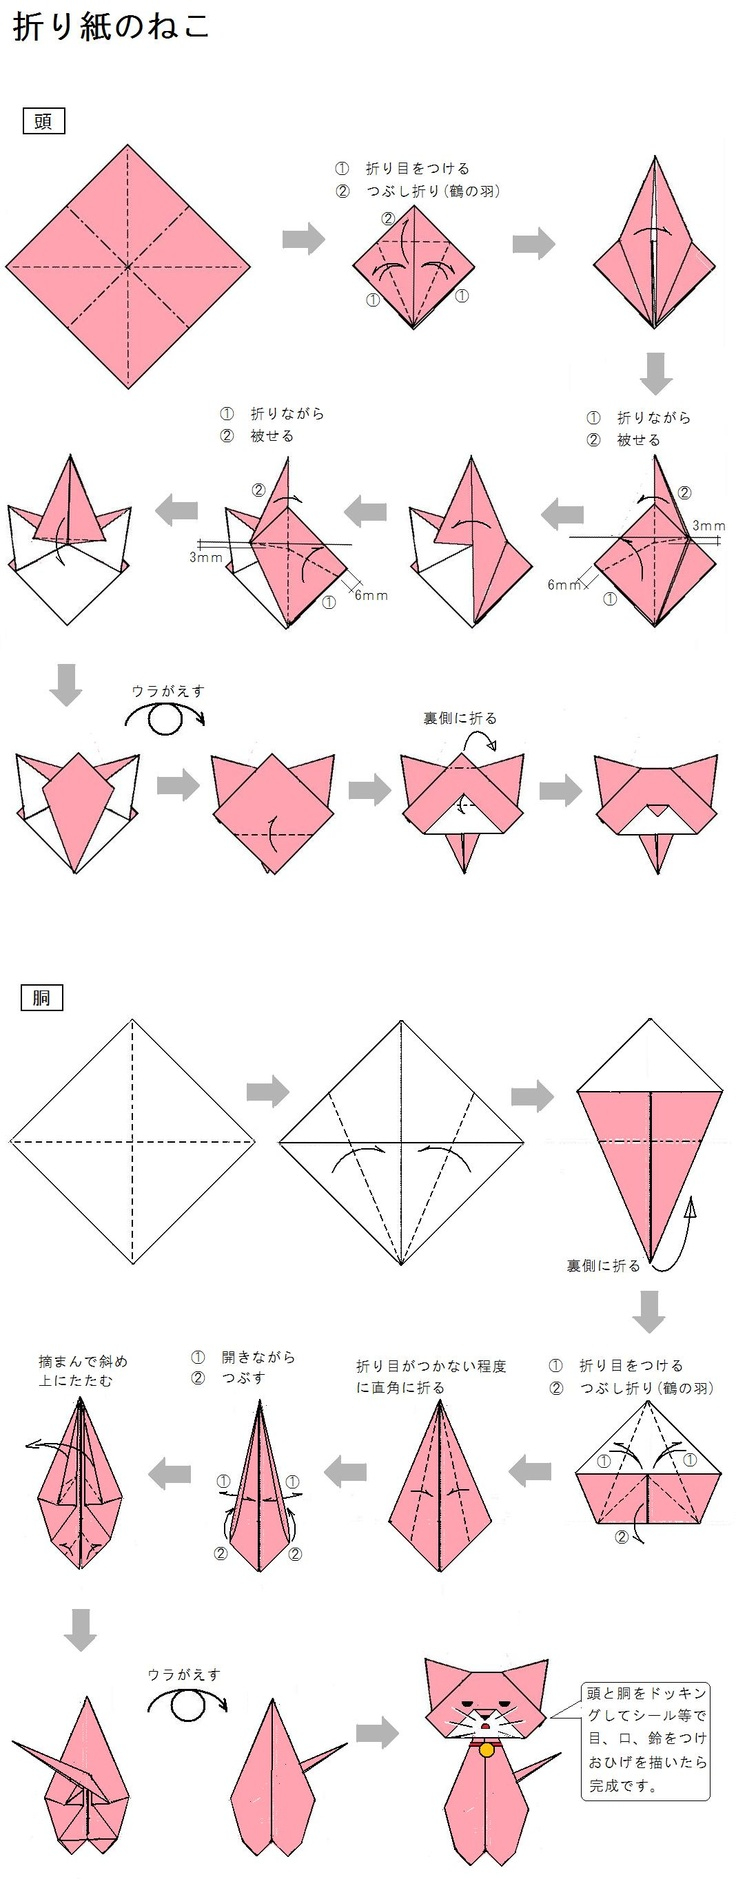 How To Make An Origami Pumpkin Halloween Origami Learn How To Make Halloween Themed Origami